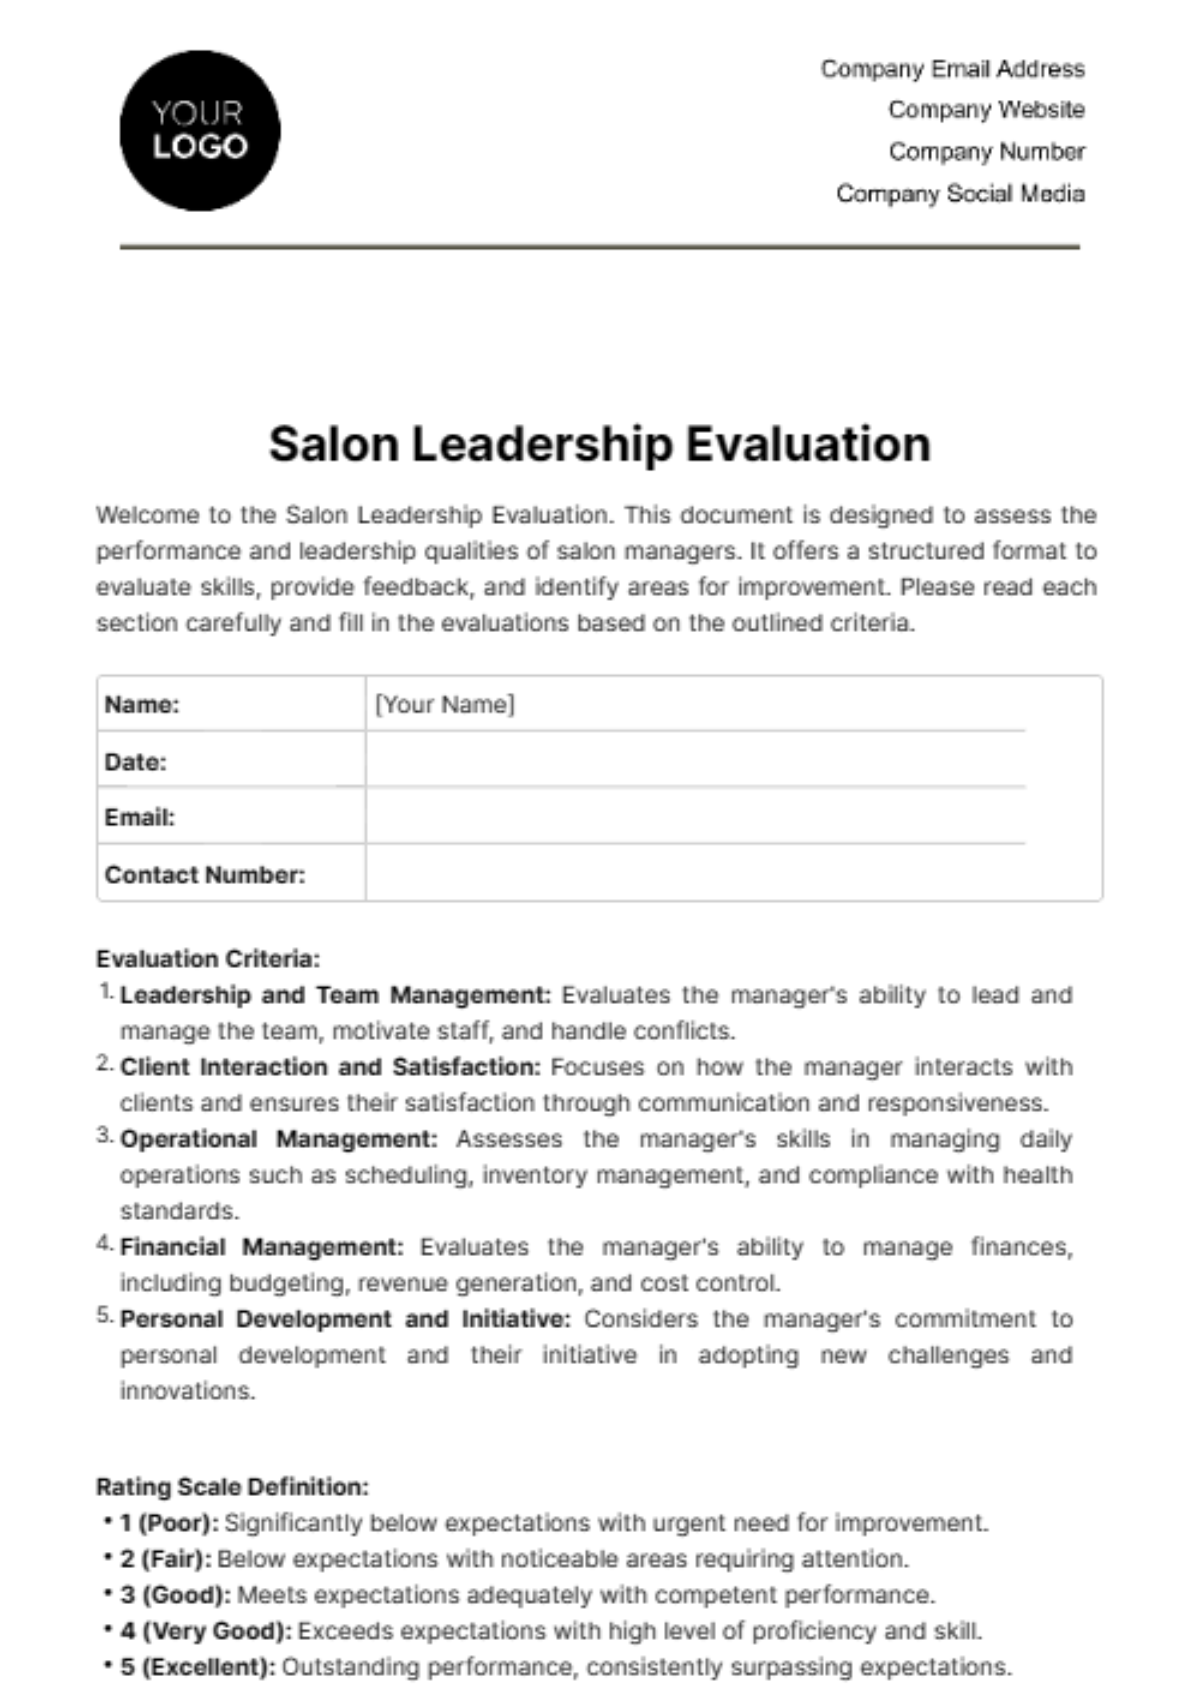 Free Salon Leadership Evaluation Template